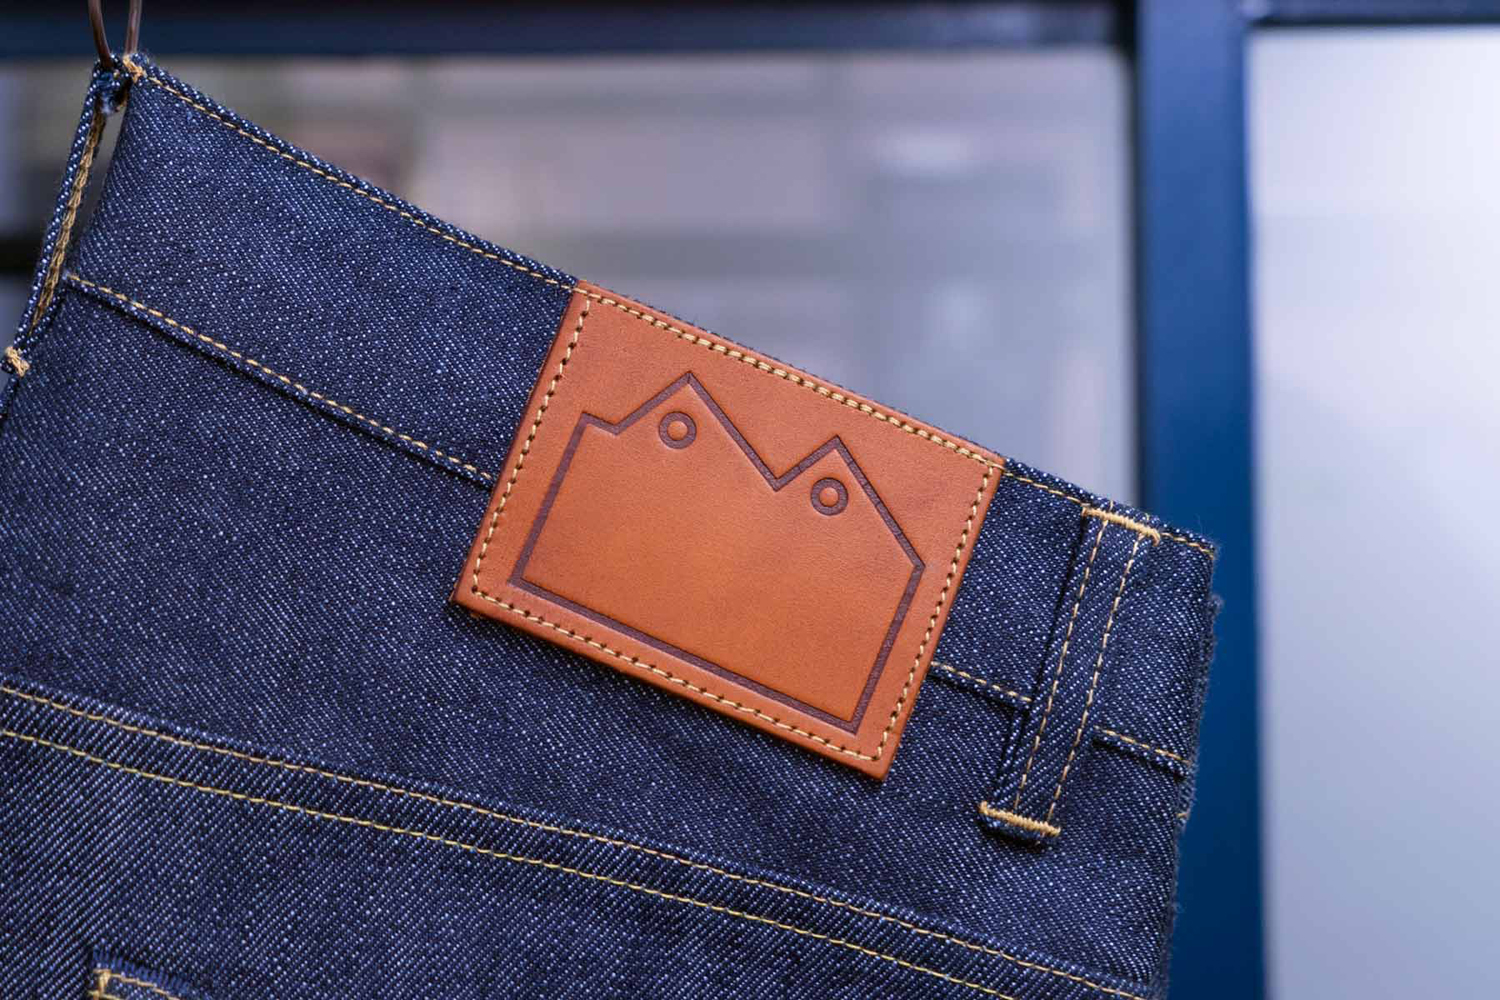 Logo design by StudioSmall for premium selvedge and organic raw denim jeans brand Blackhorse Lane Ateliers.